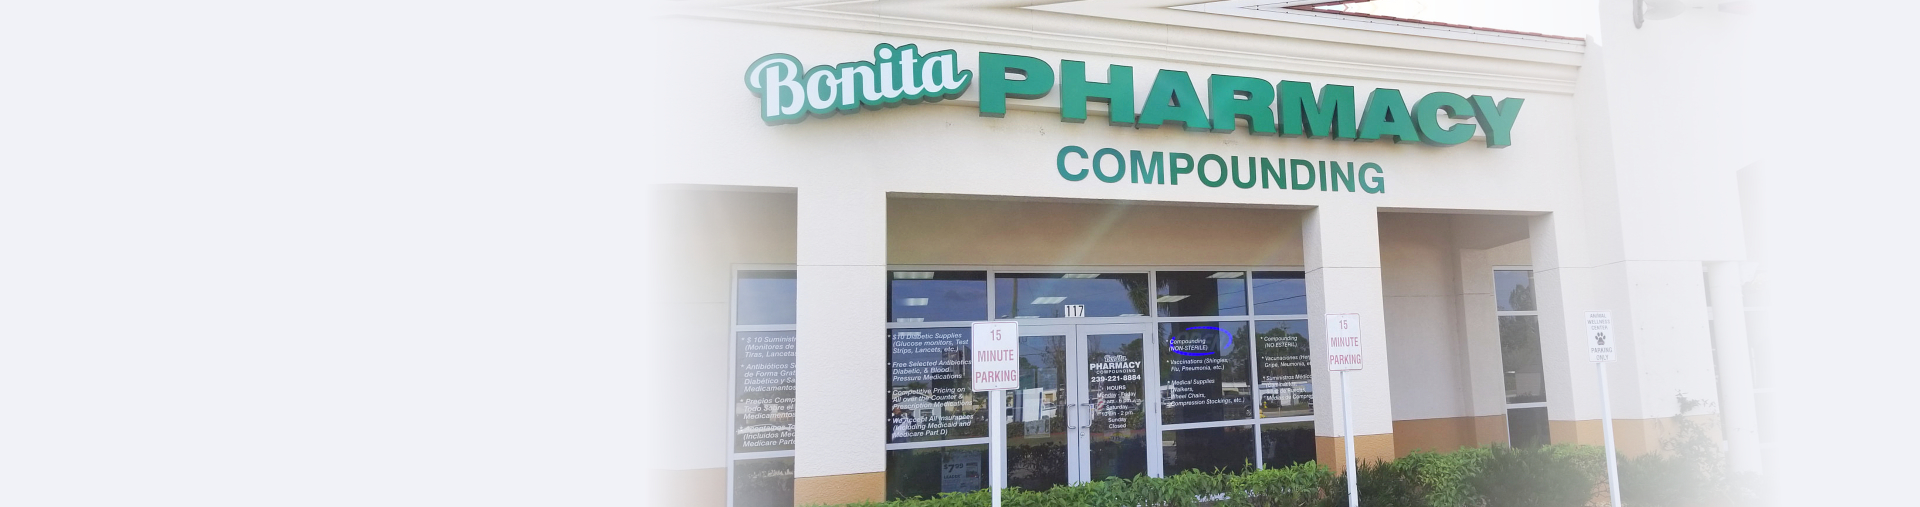 Bonita Pharmacy